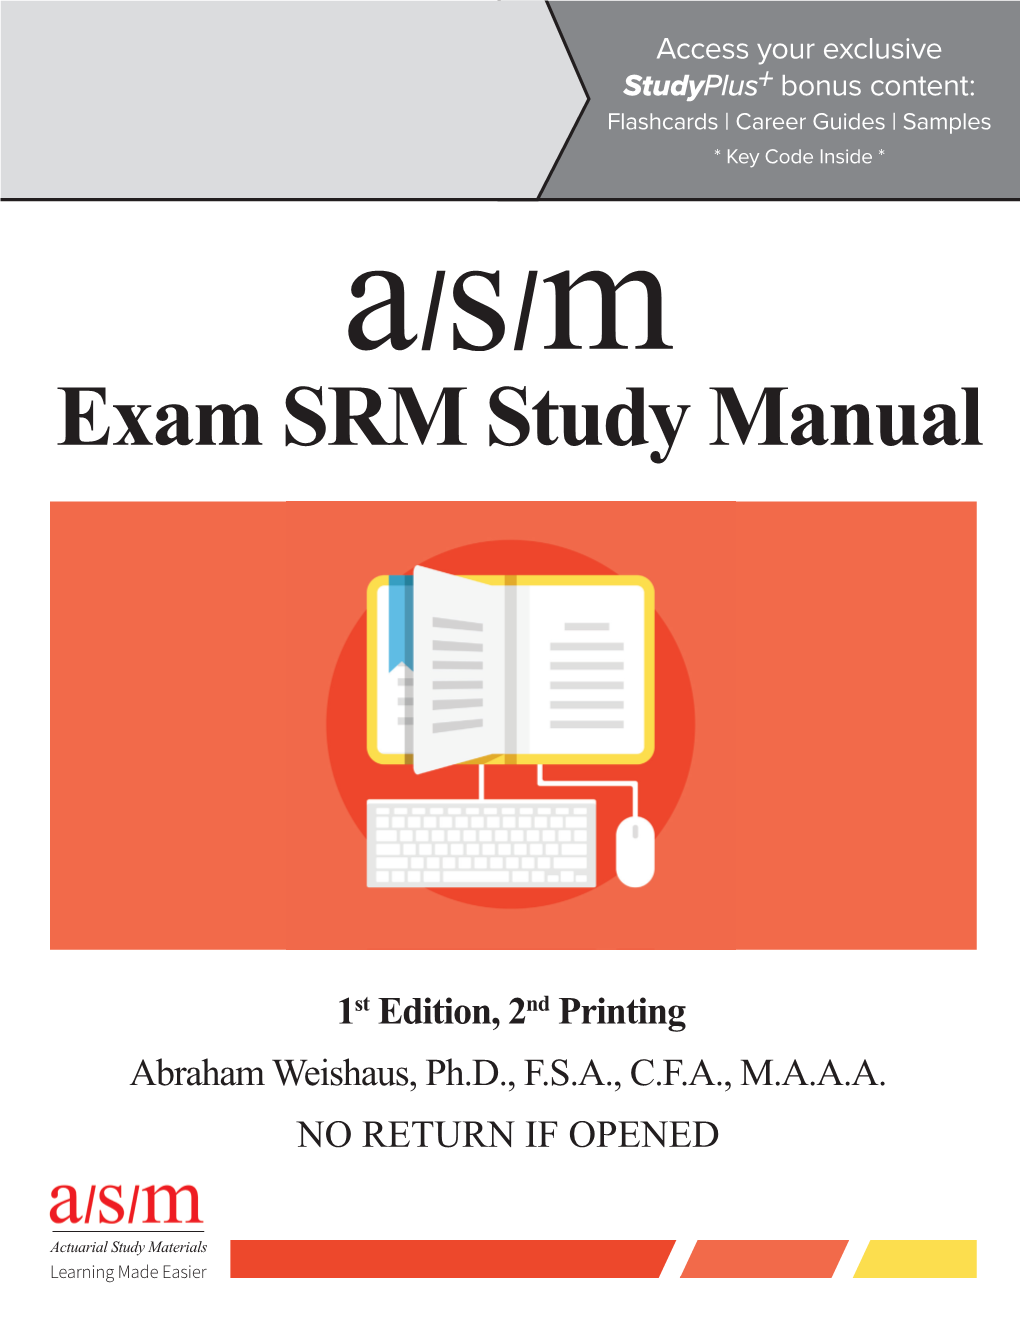 Exam SRM Study Manual